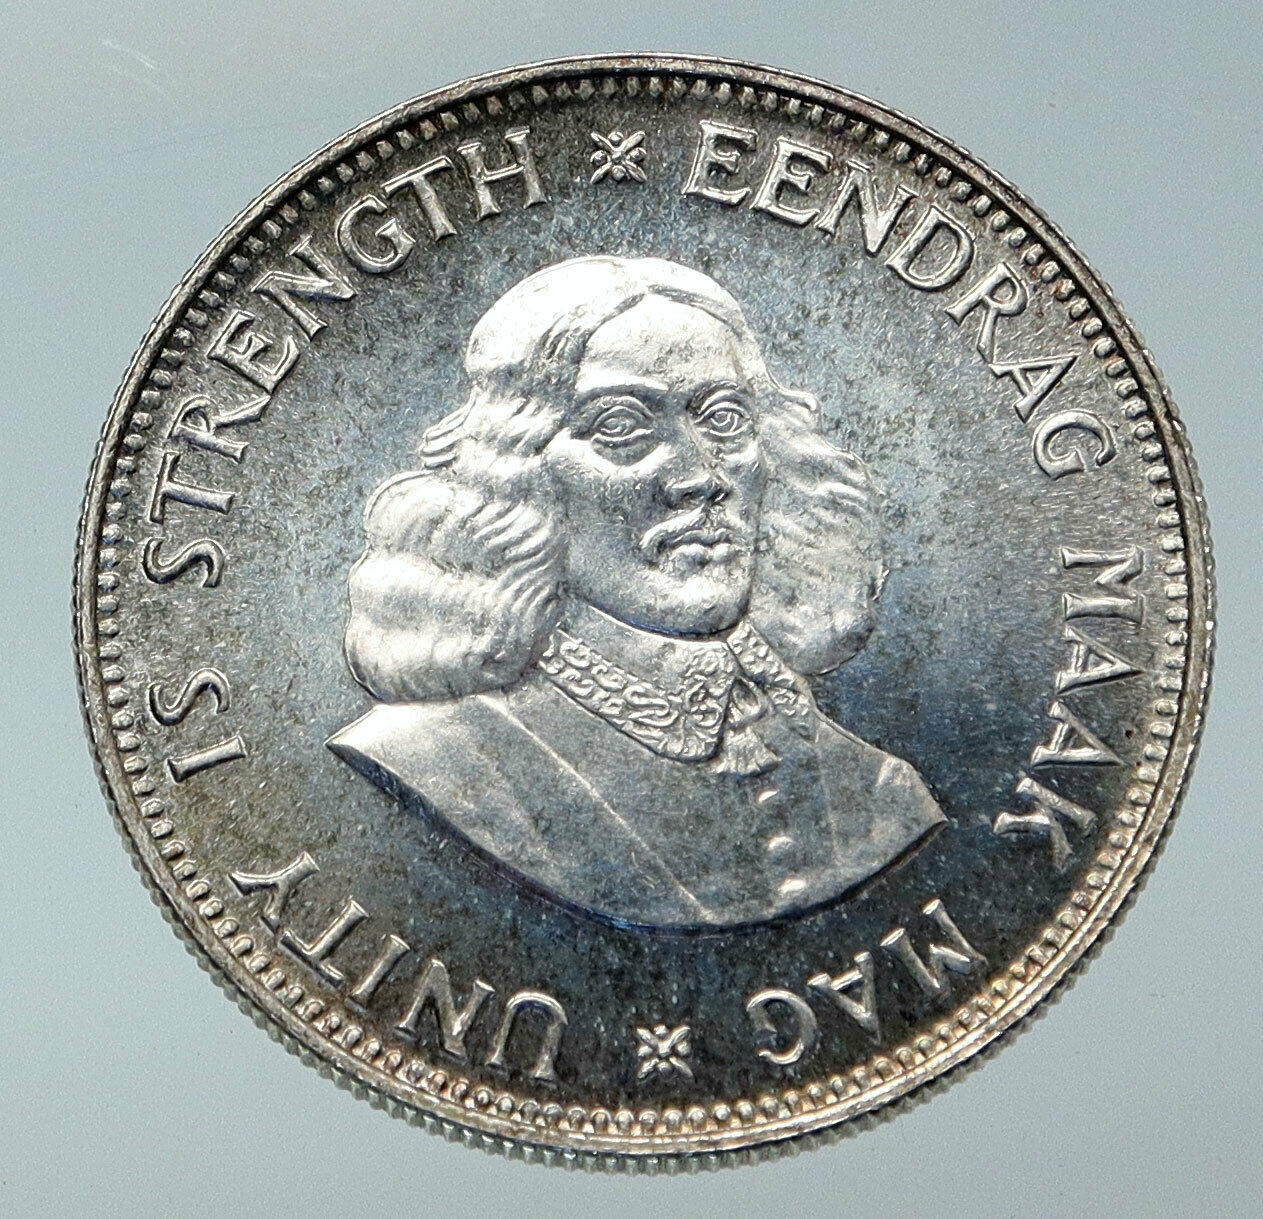 1964 SOUTH AFRICA Queen Elizabeth II Riebeeck Genuine Silver 20 Cent Coin i85904